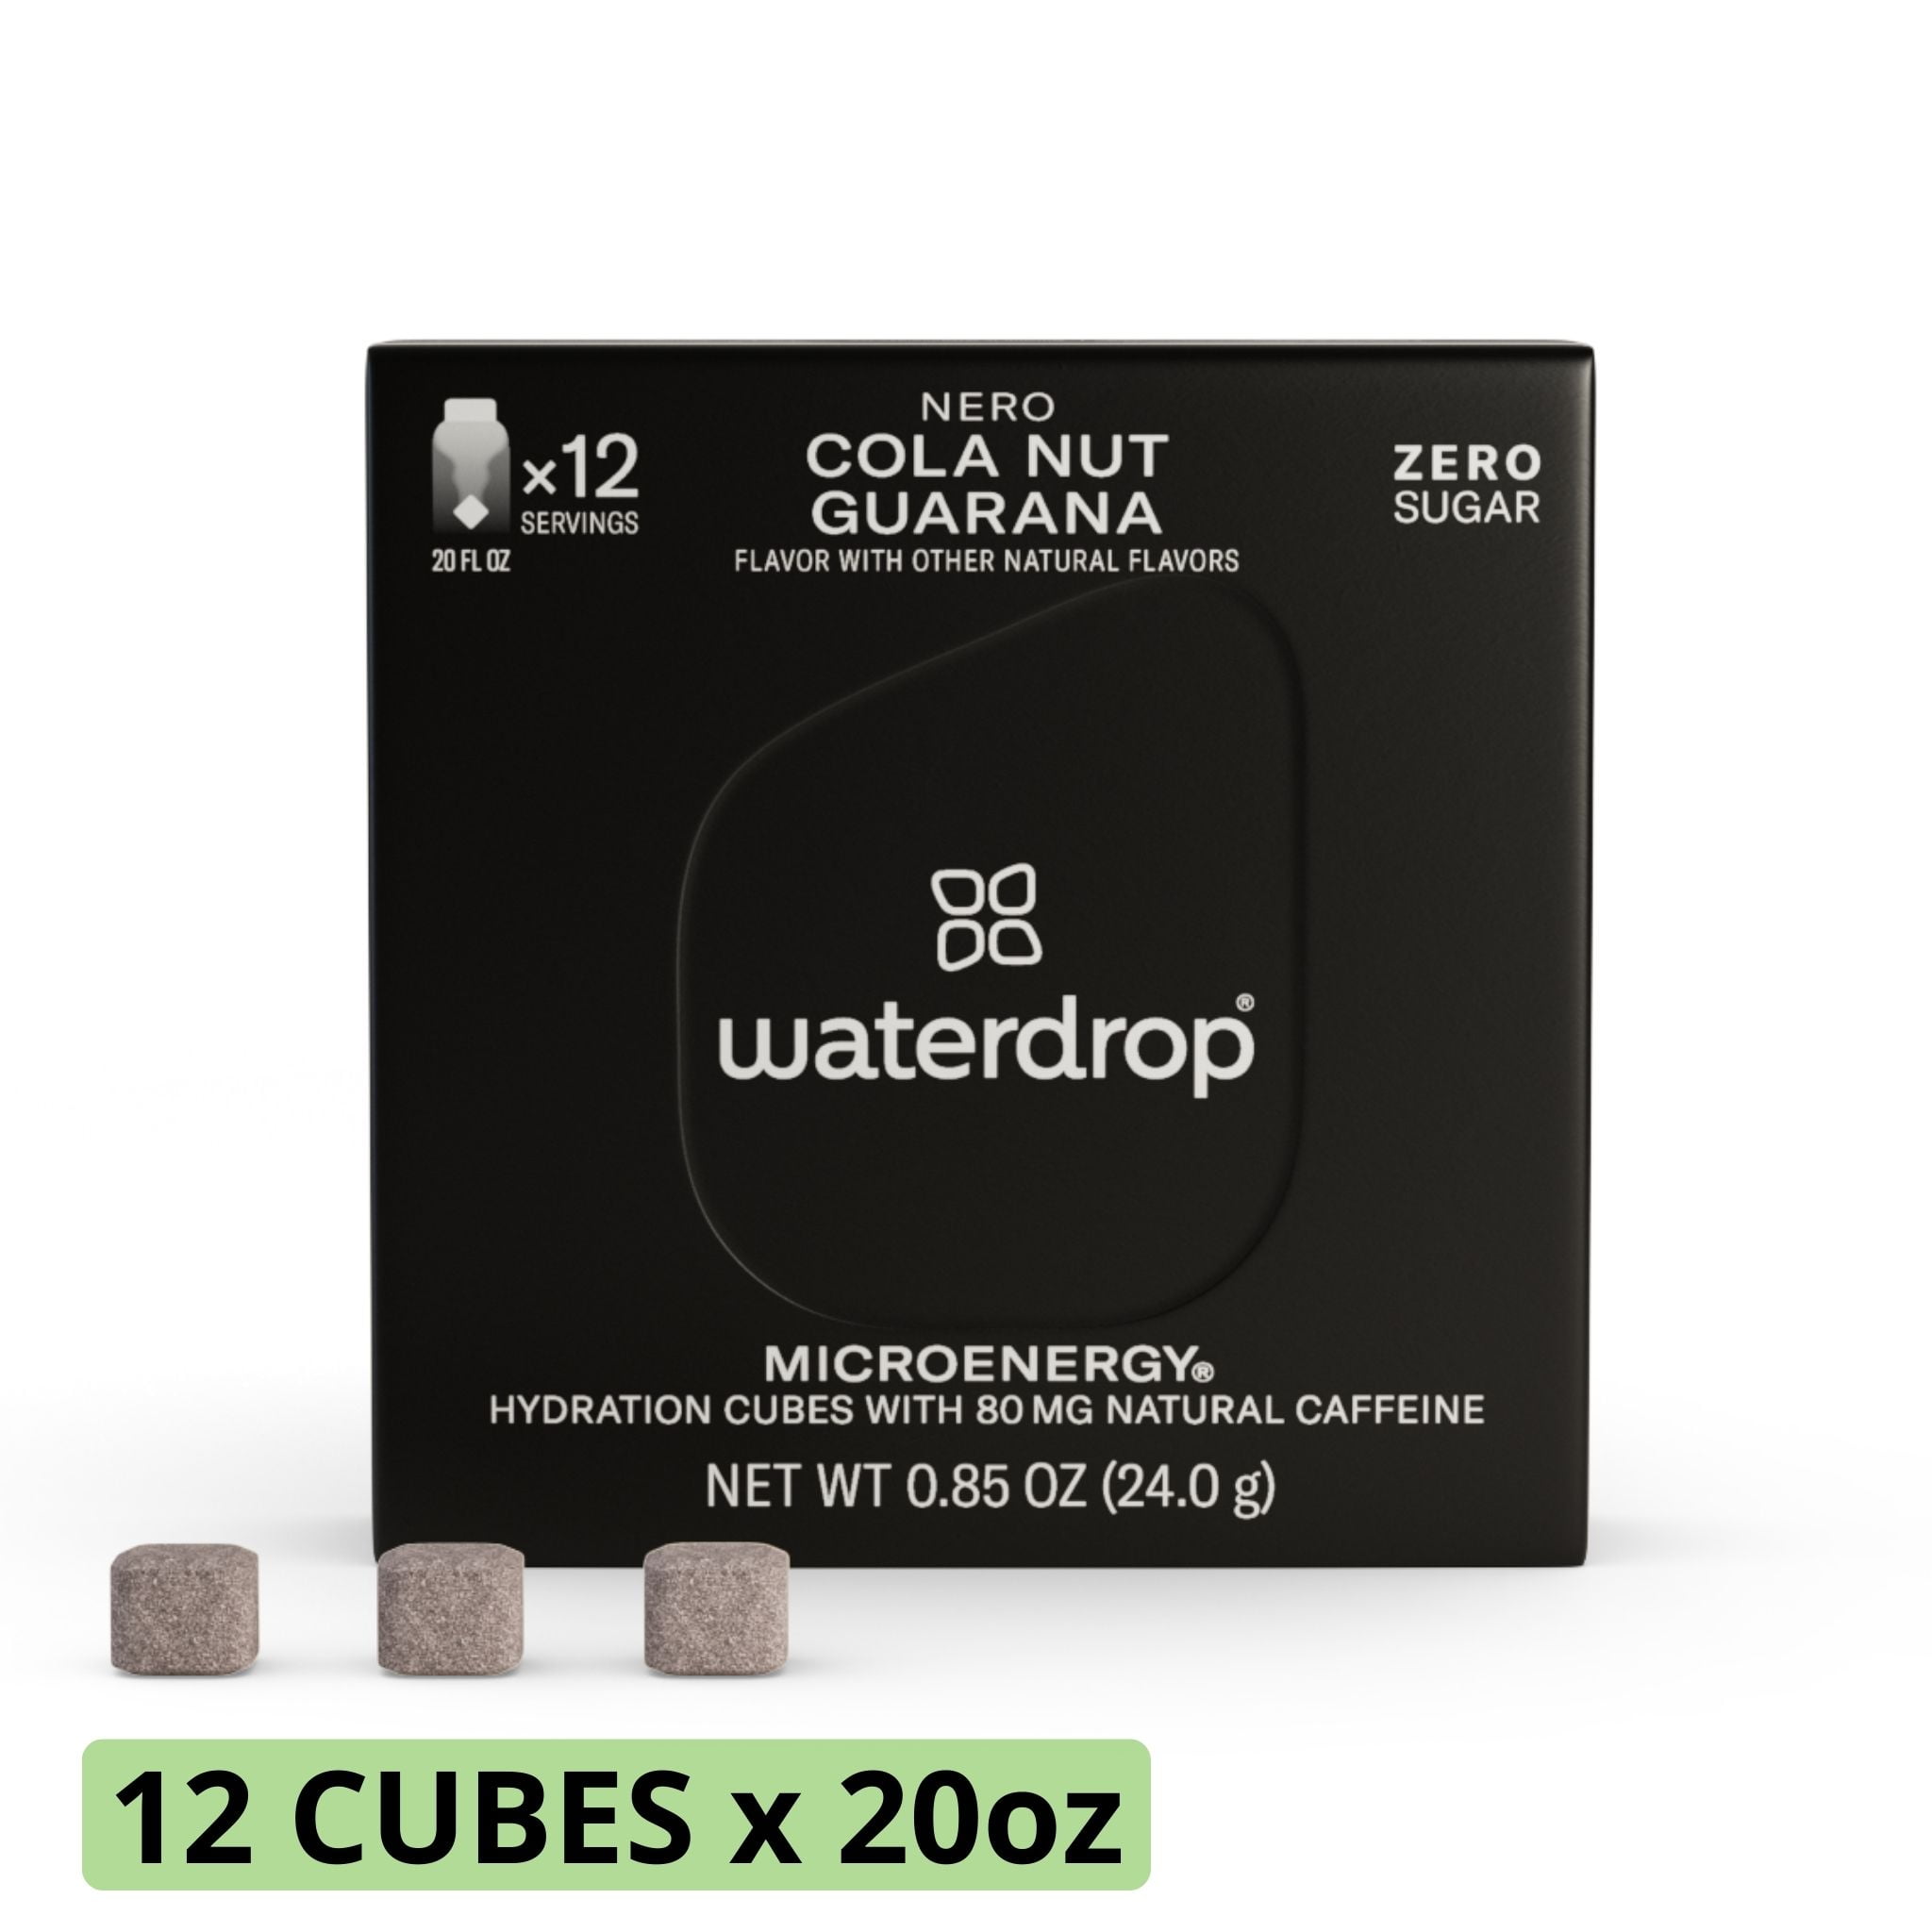 Waterdrop Microenergy, Nero, Cola Nut Guarana, 12 Cubes, 0.85 oz